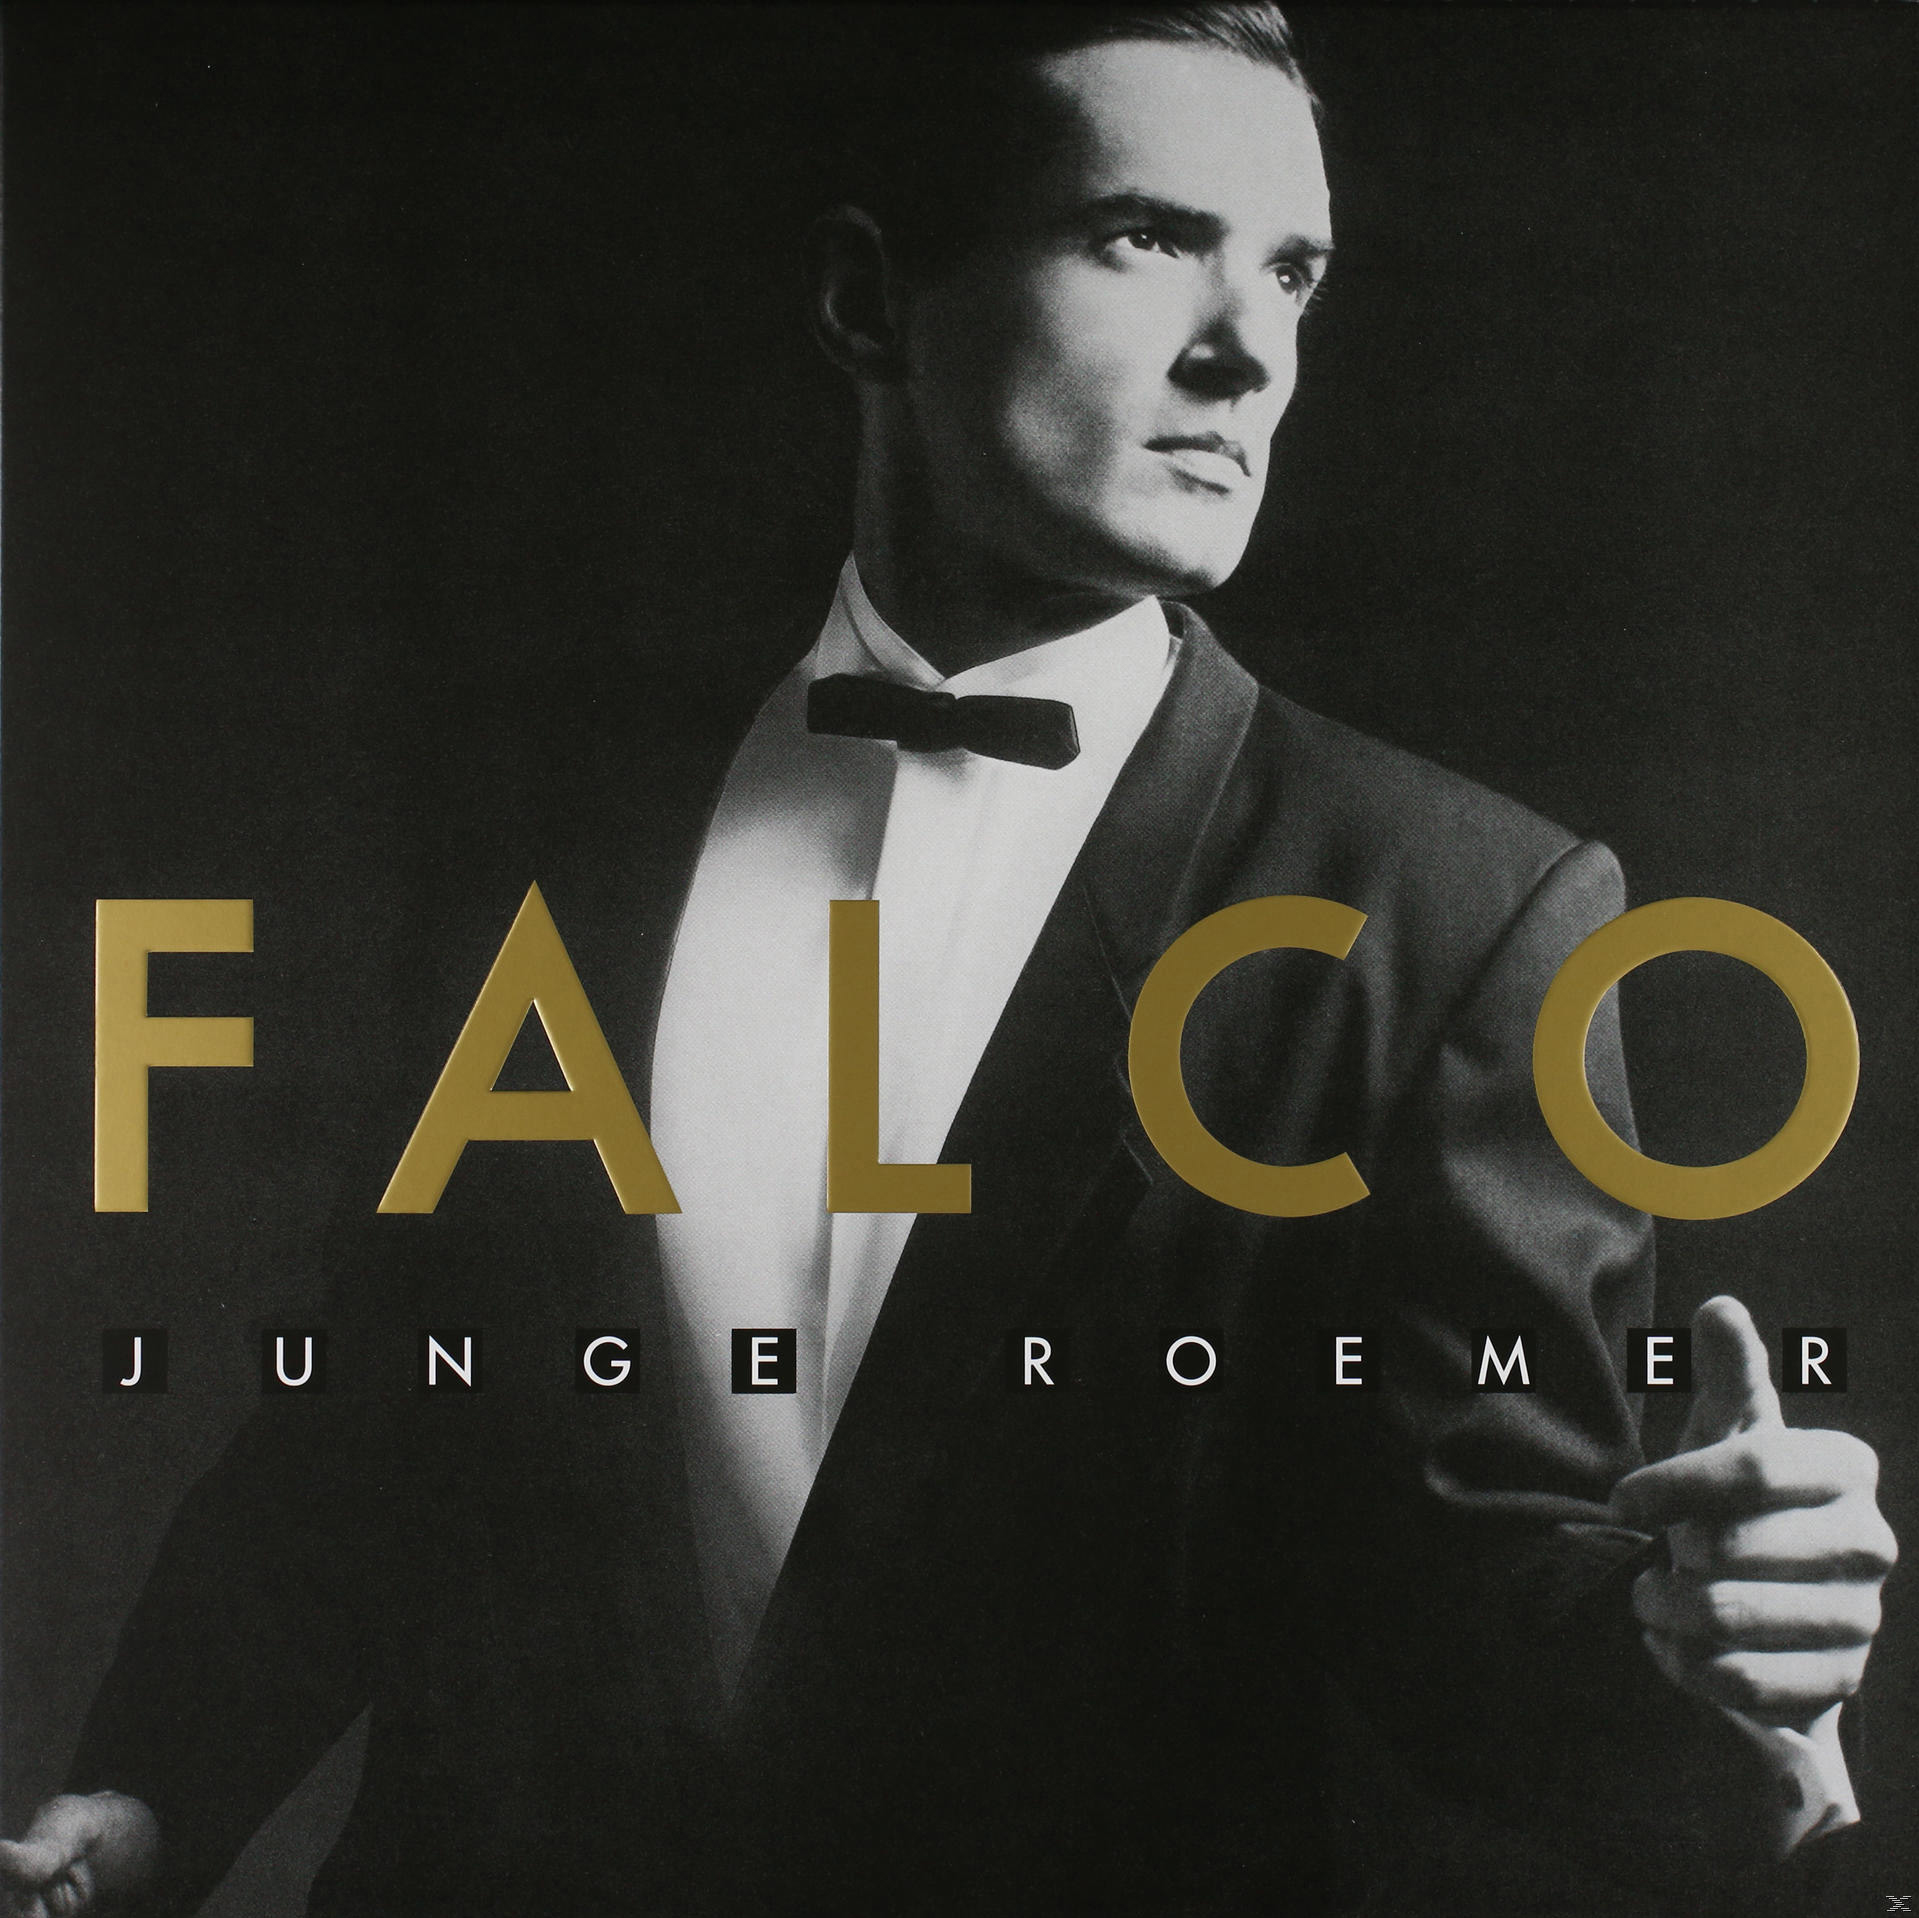 Roemer (Vinyl) Falco - - Junge